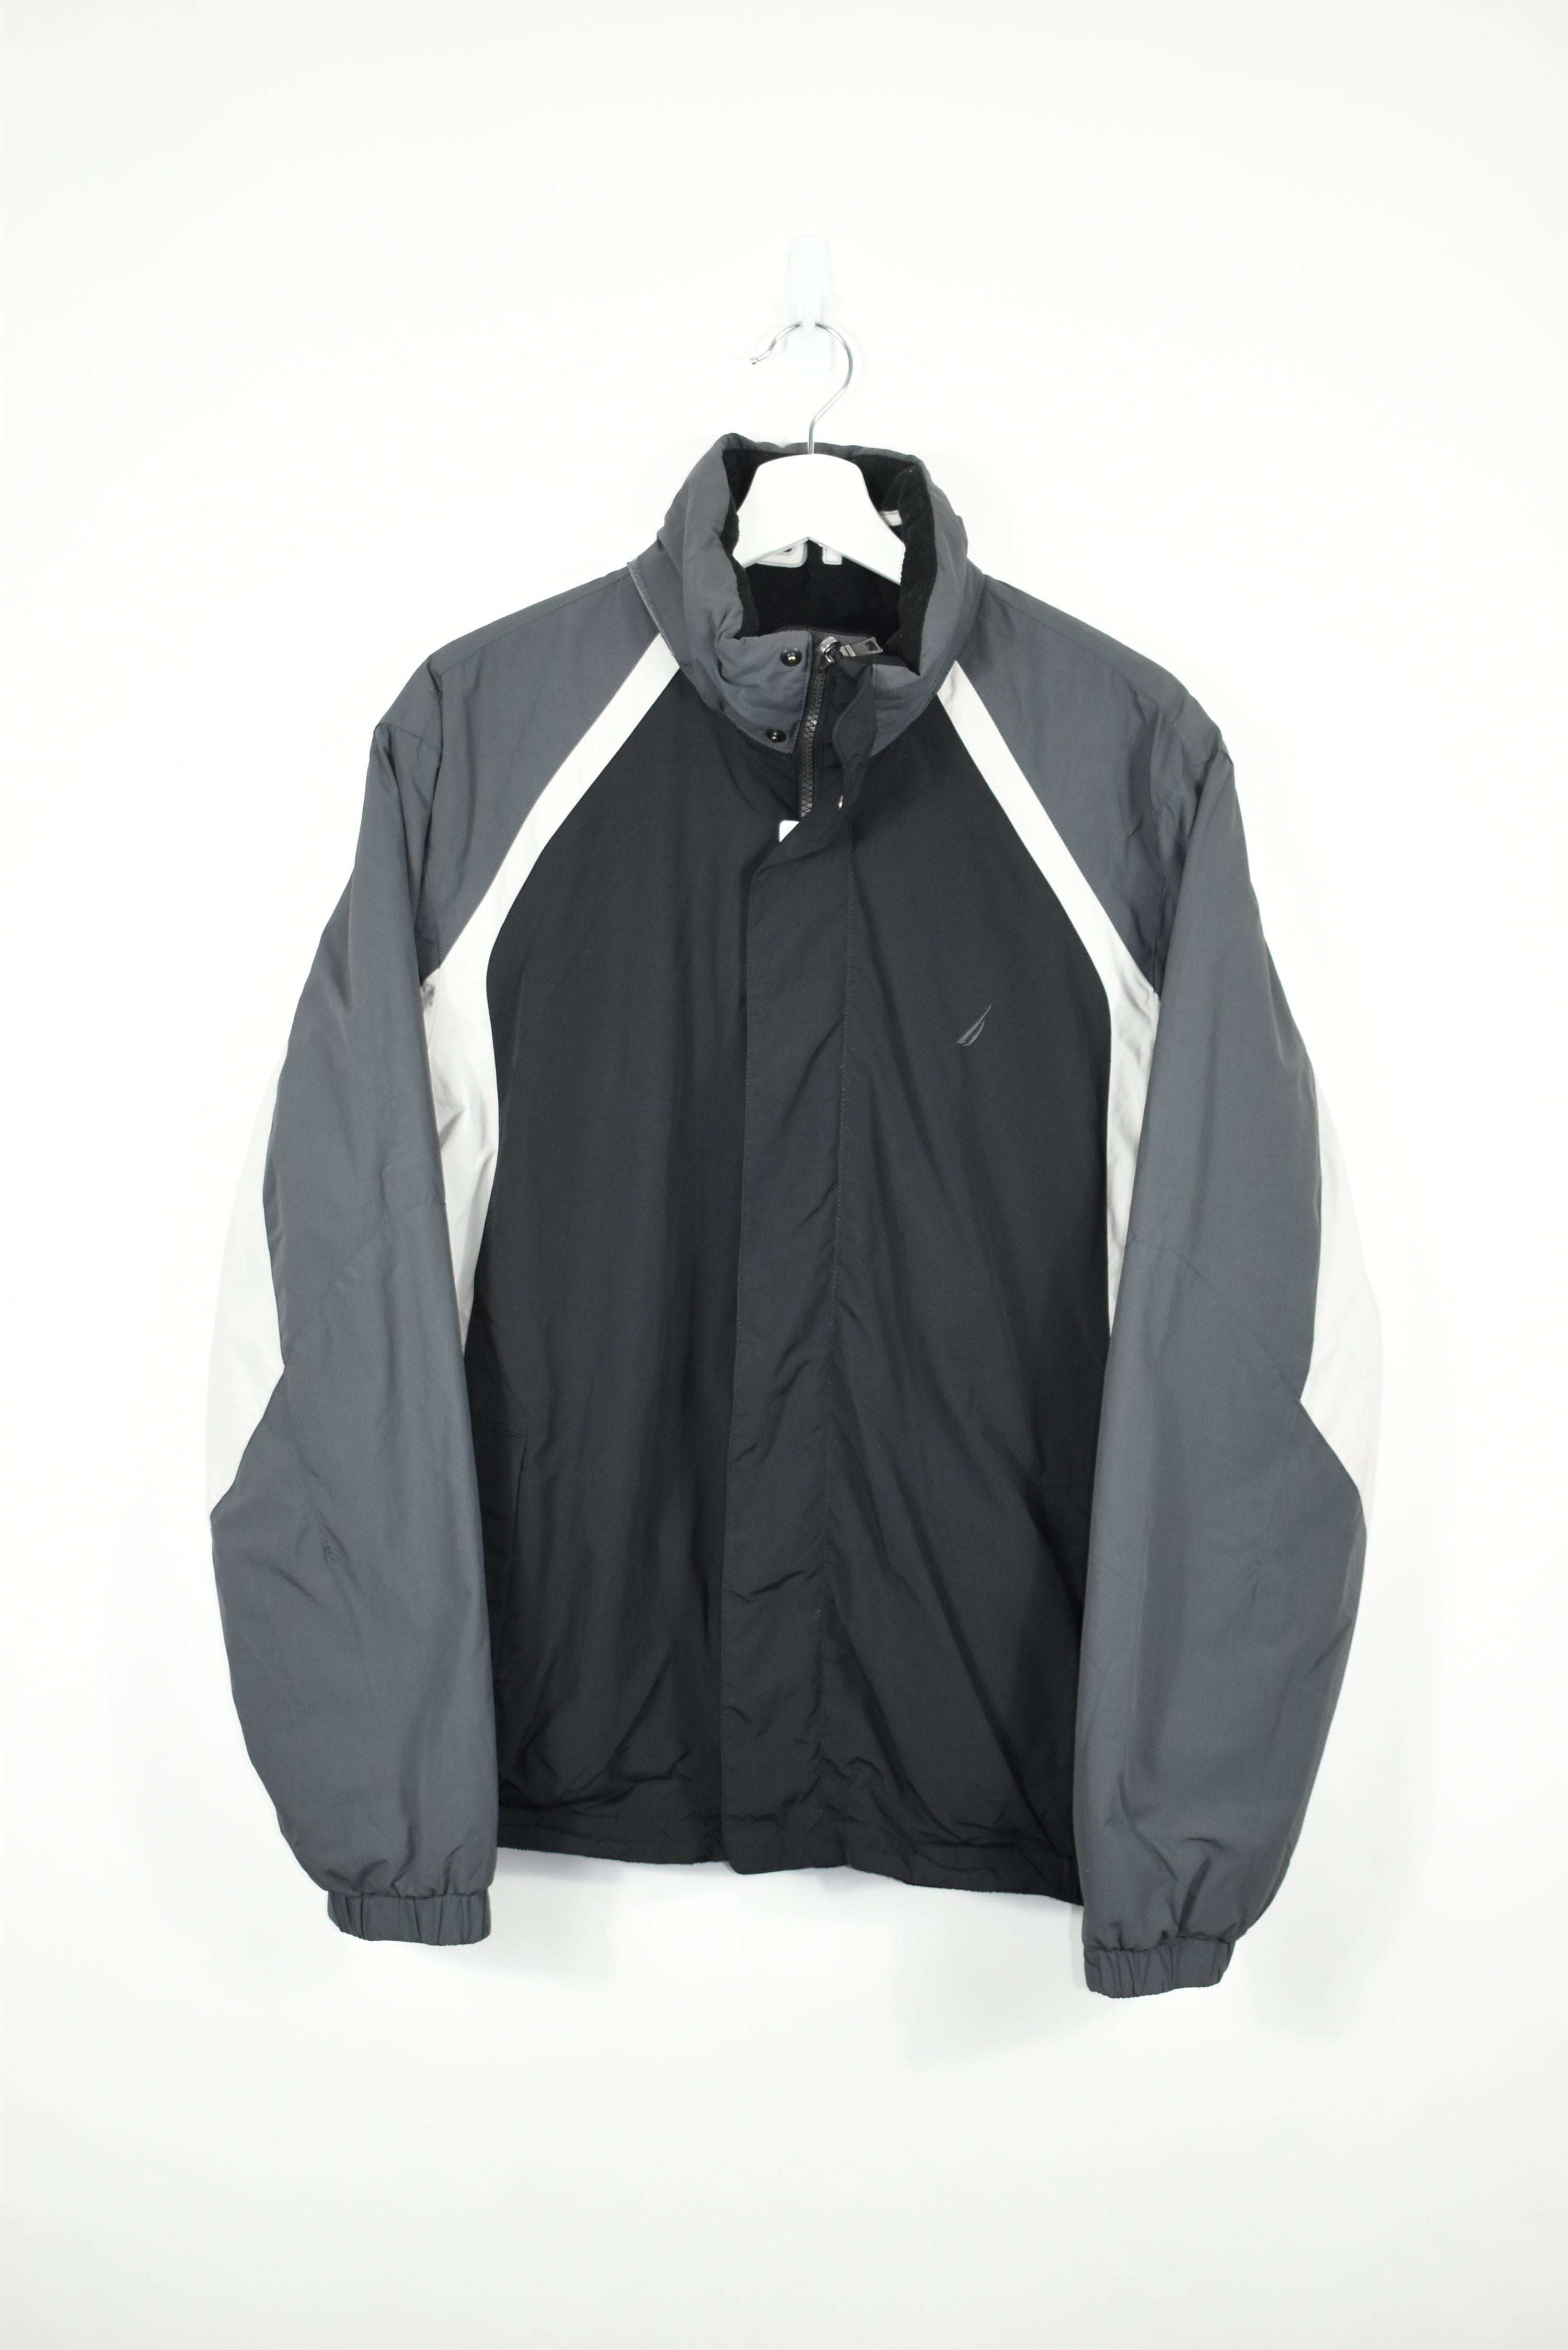 Vintage Nautica Reversible Fleece Jacket Large